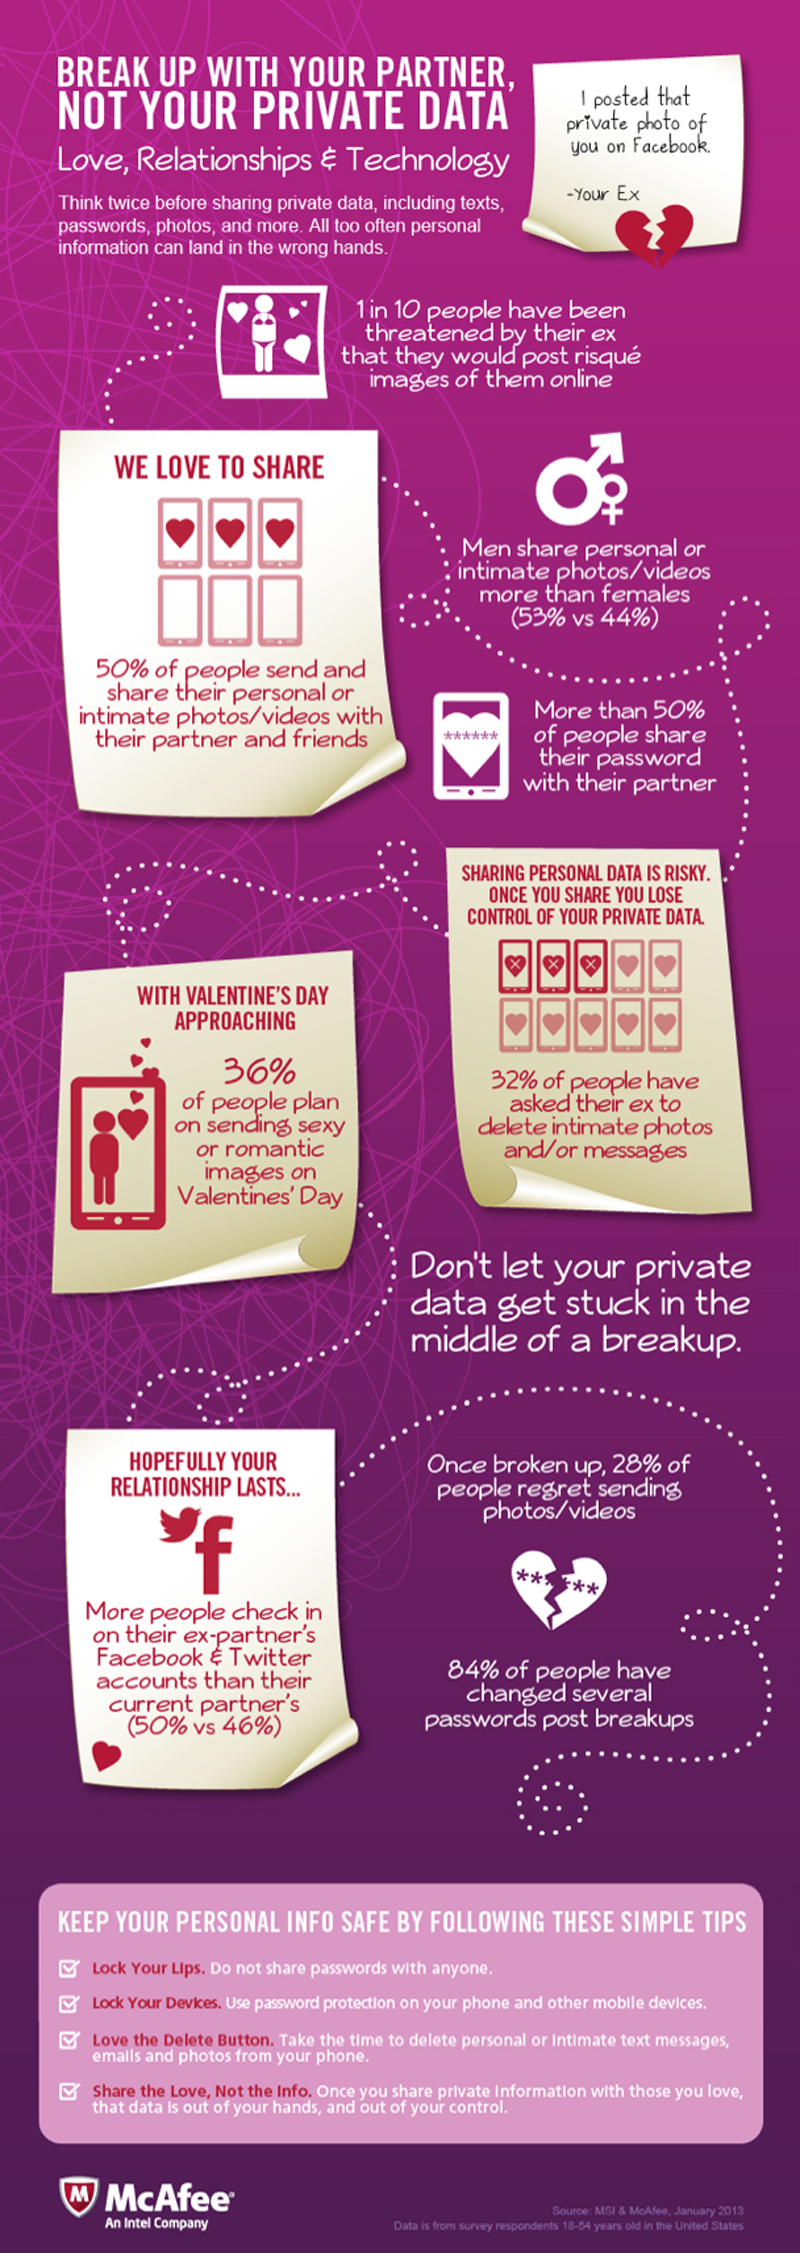 McAfee Private Data Valentine's Day Survey